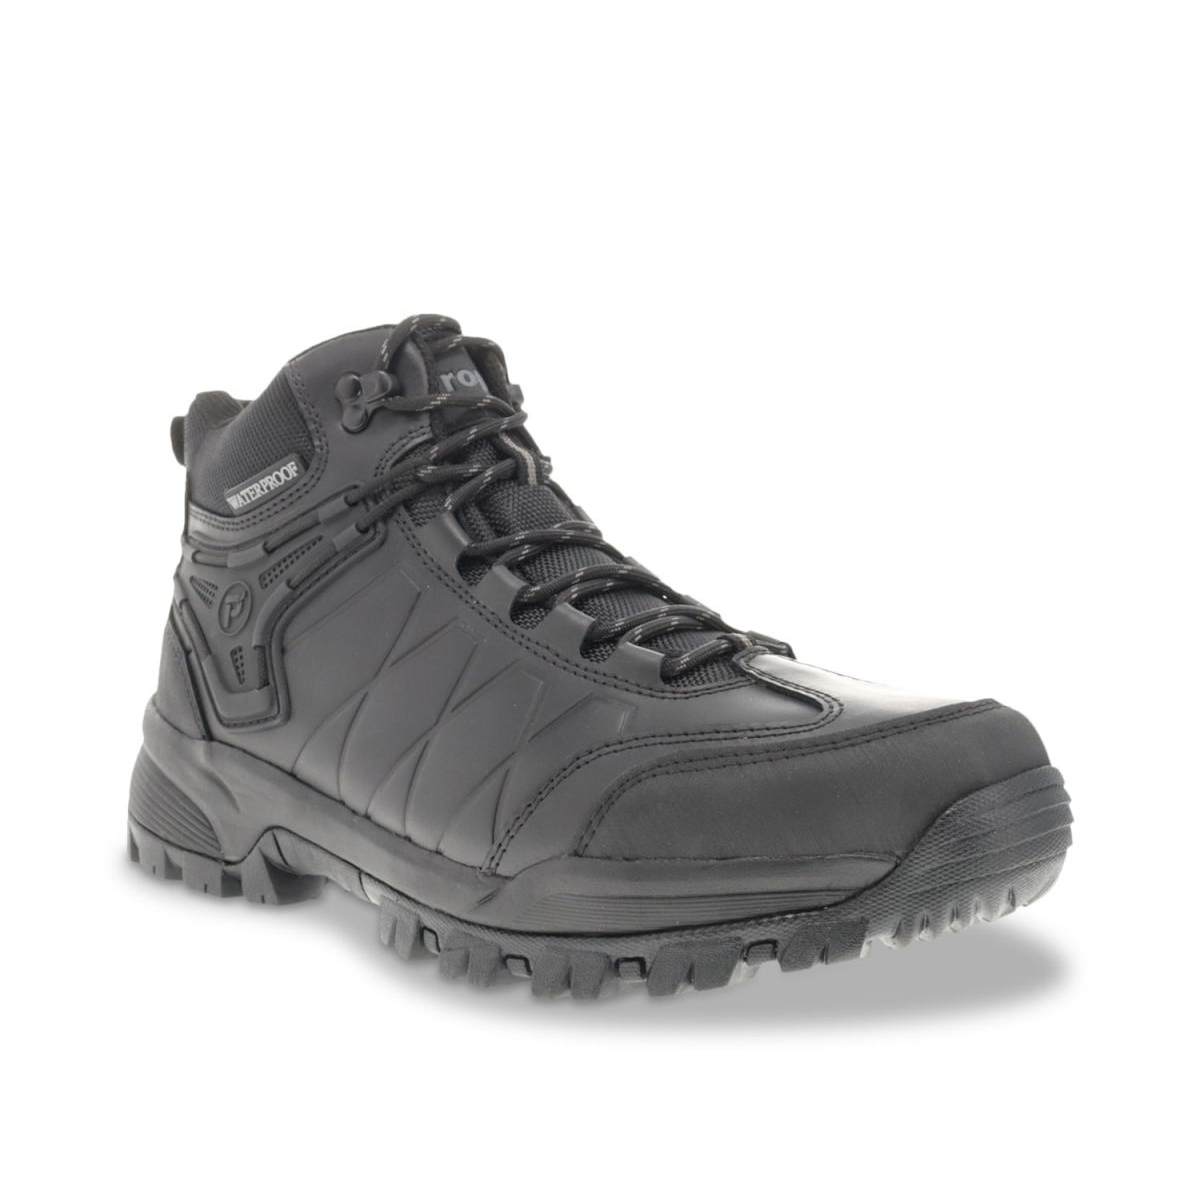 Propet Men's Ridge Walker Force Hiking Boots Black - MBA052LBLK BLACK - BLACK, 10 Wide